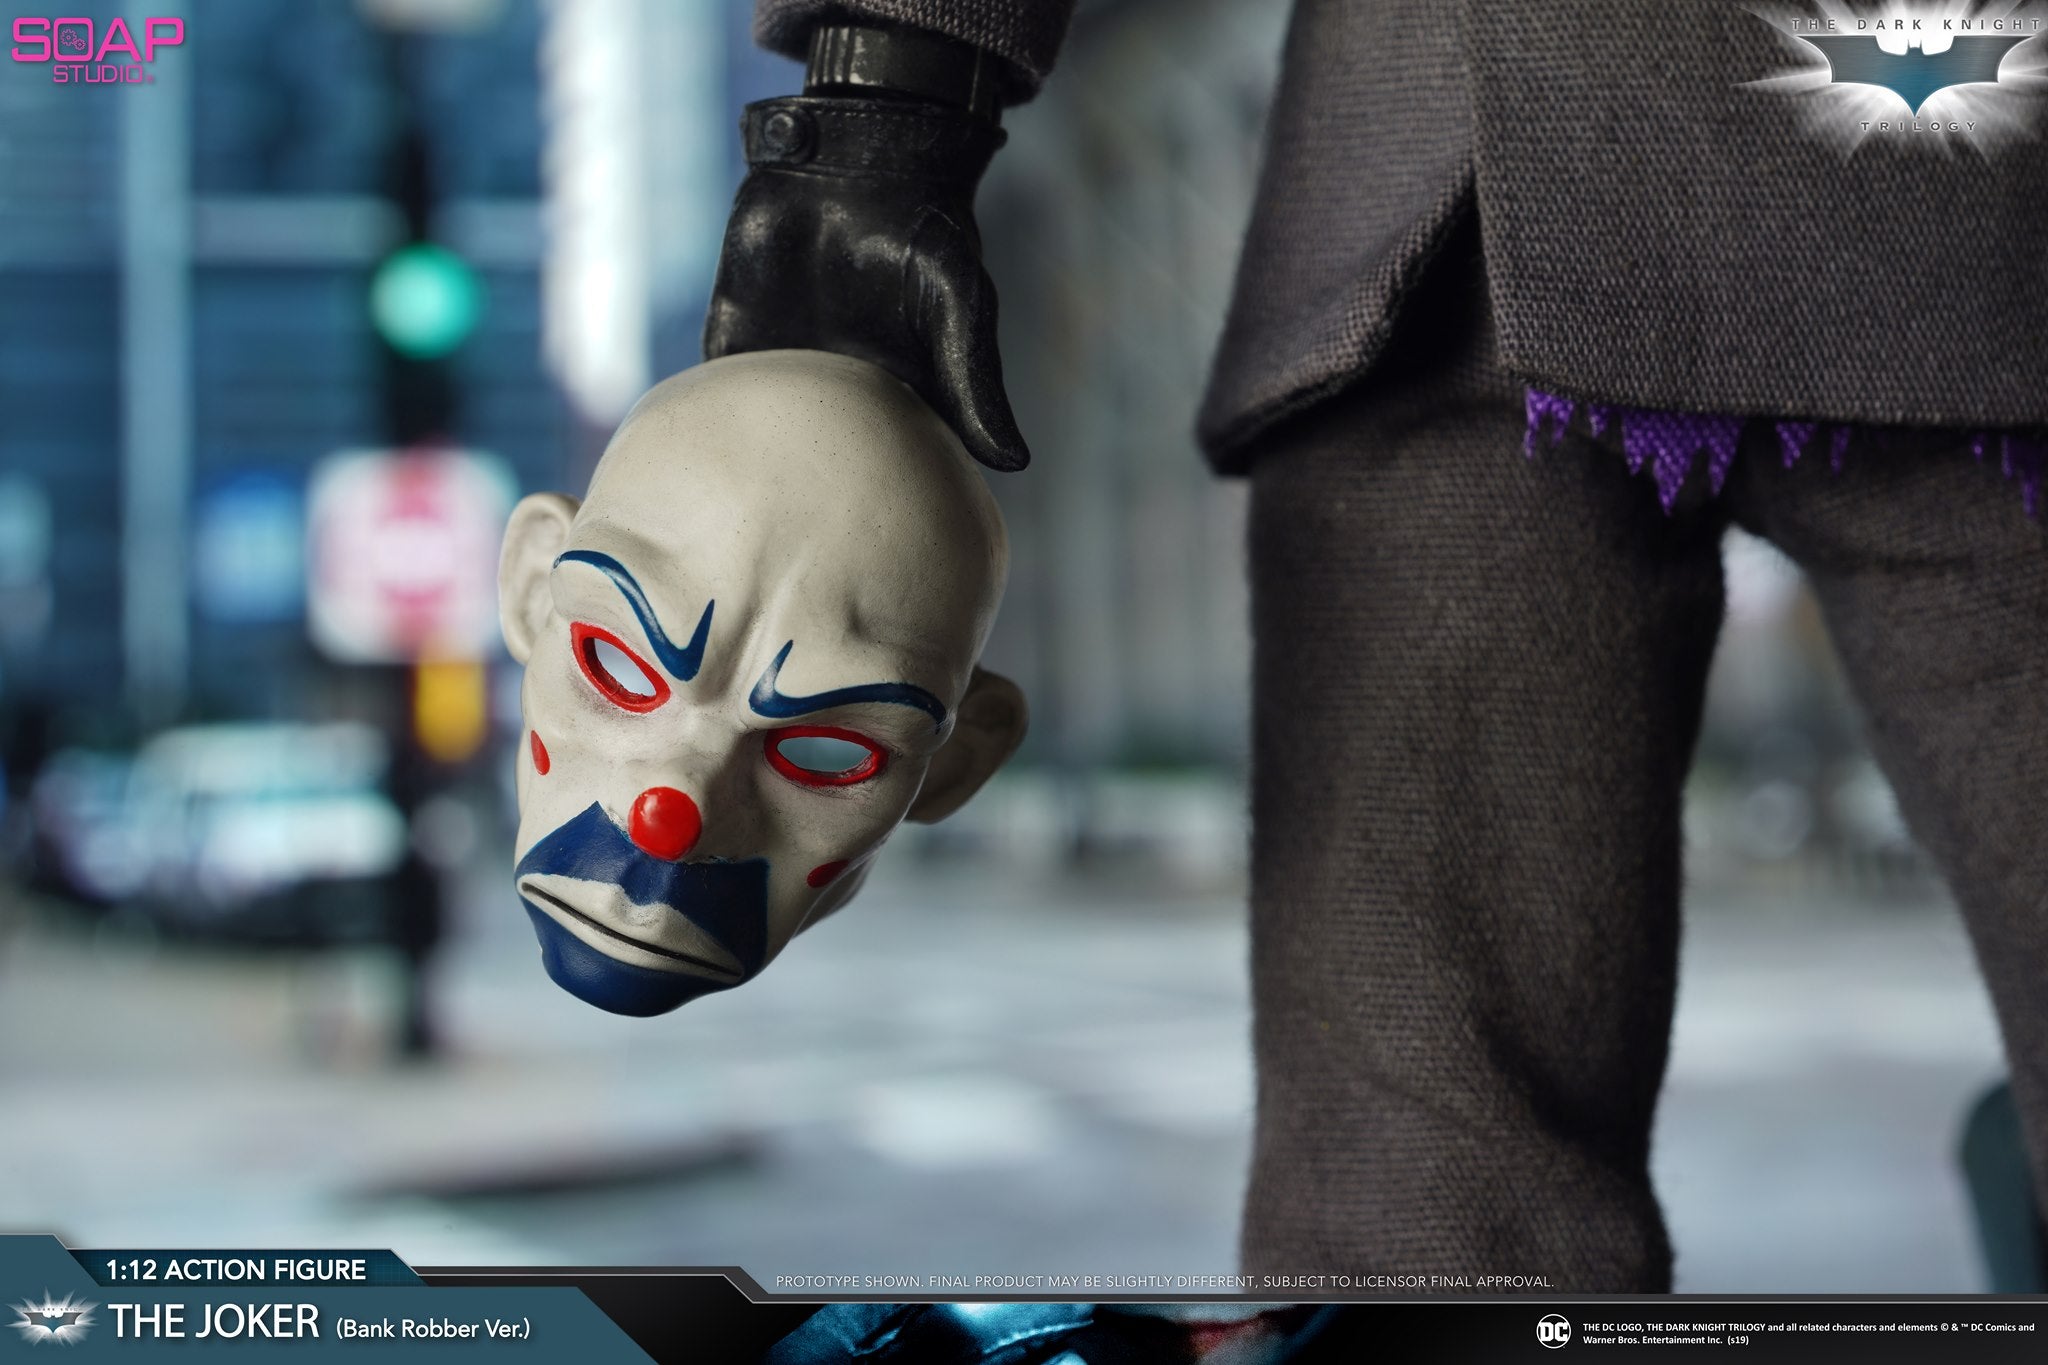 Soap Studio - The Dark Knight - The Joker (Bank Robber Ver.) (1/12 Scale) - Marvelous Toys